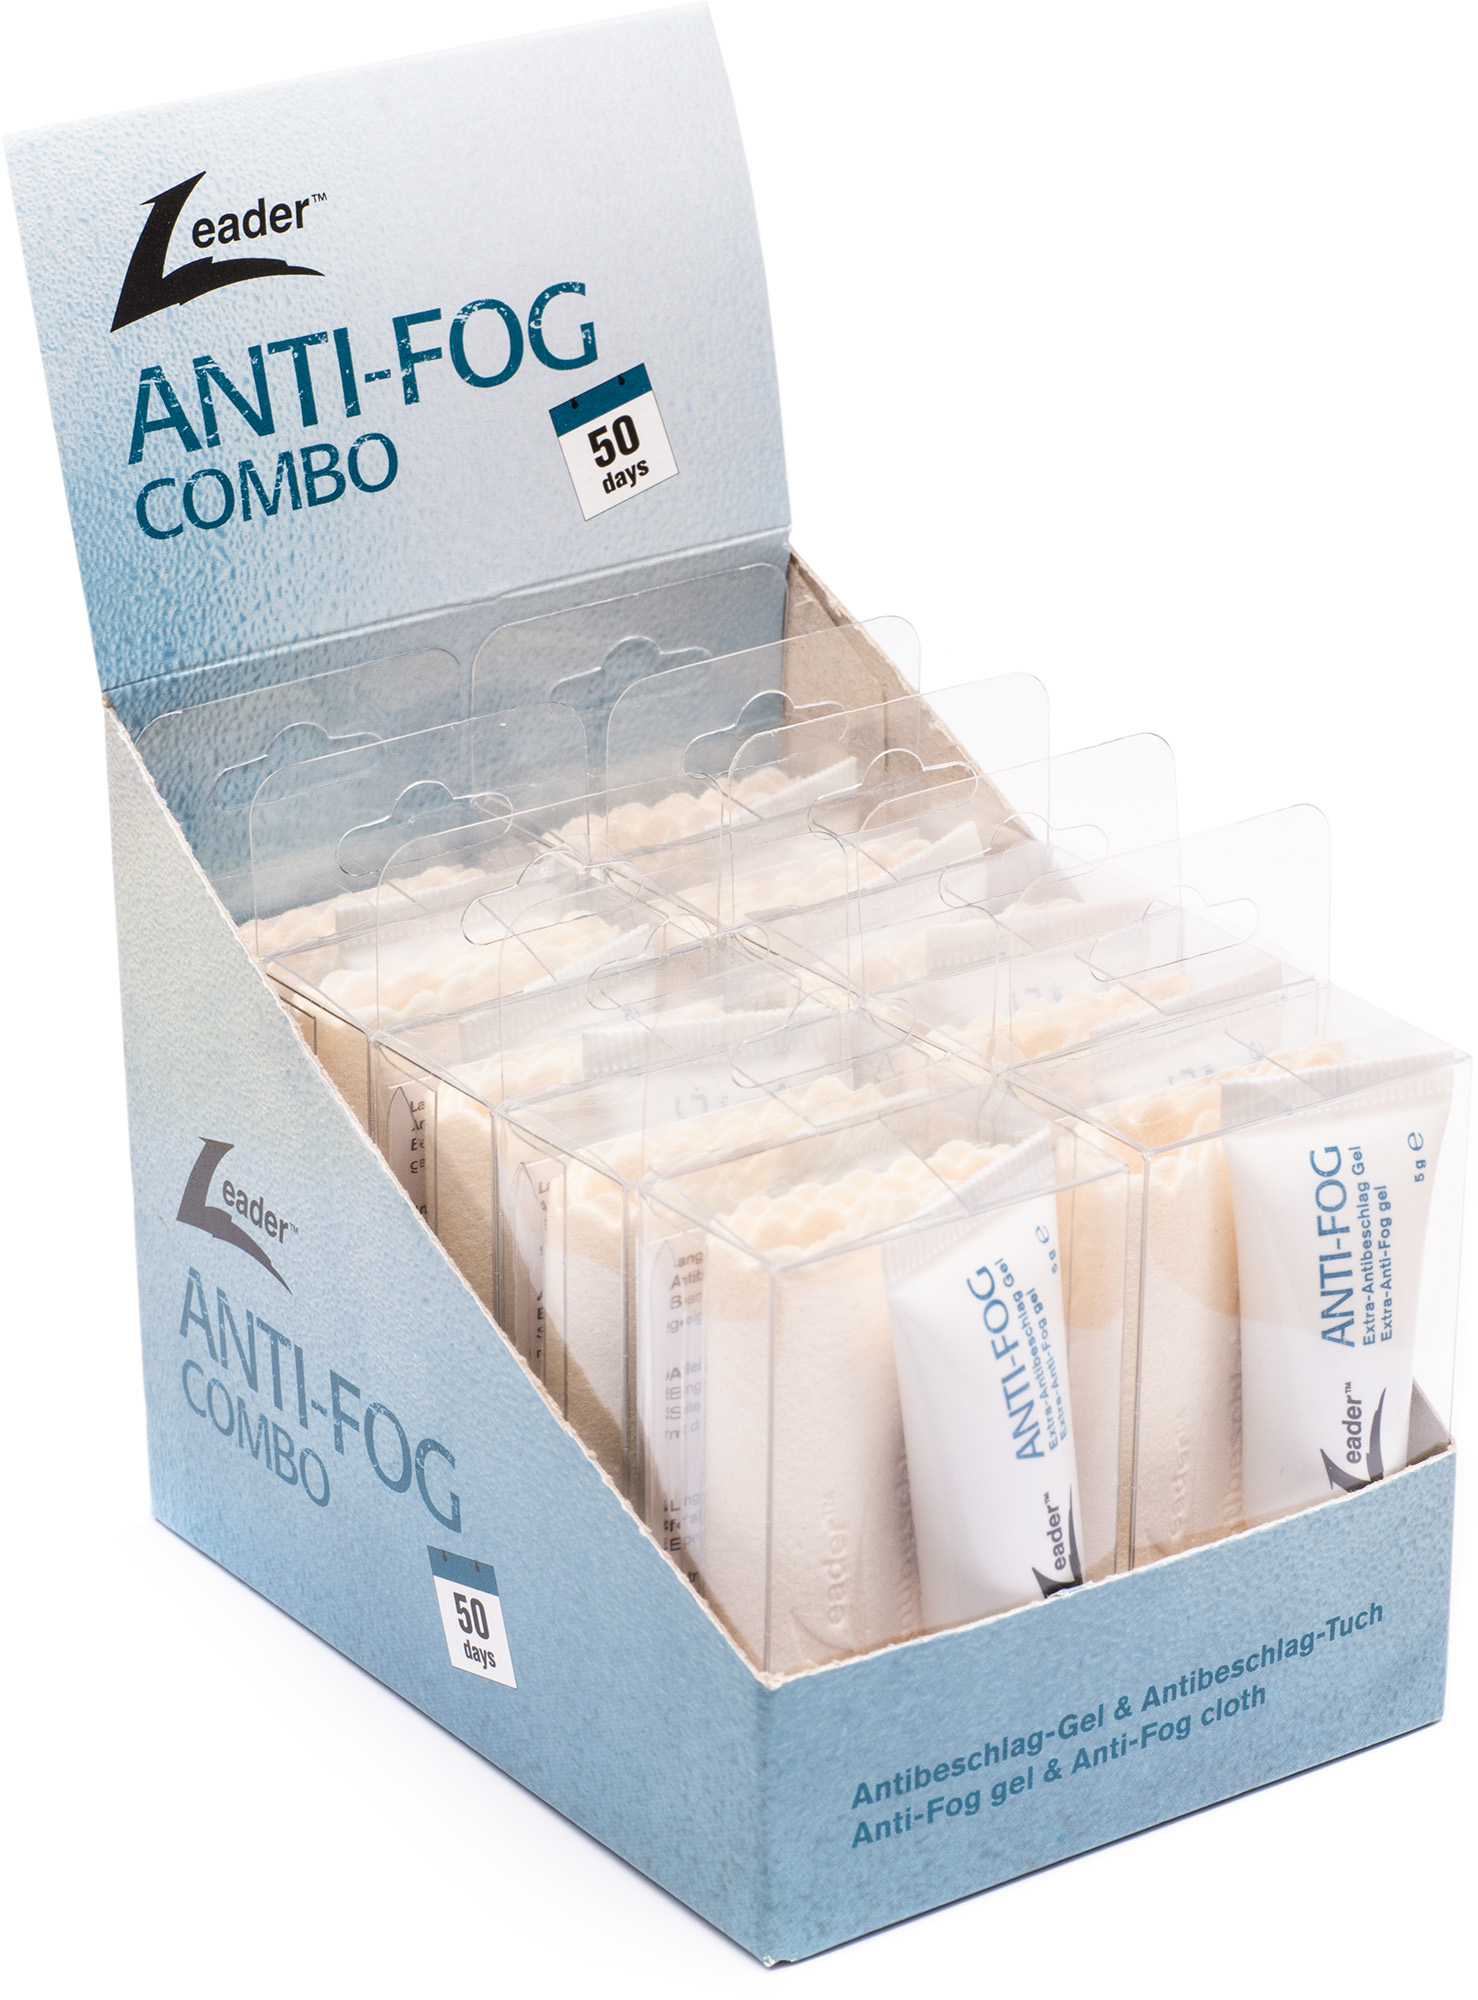 Anti-Fog Combo avec applicateur à pointe fine